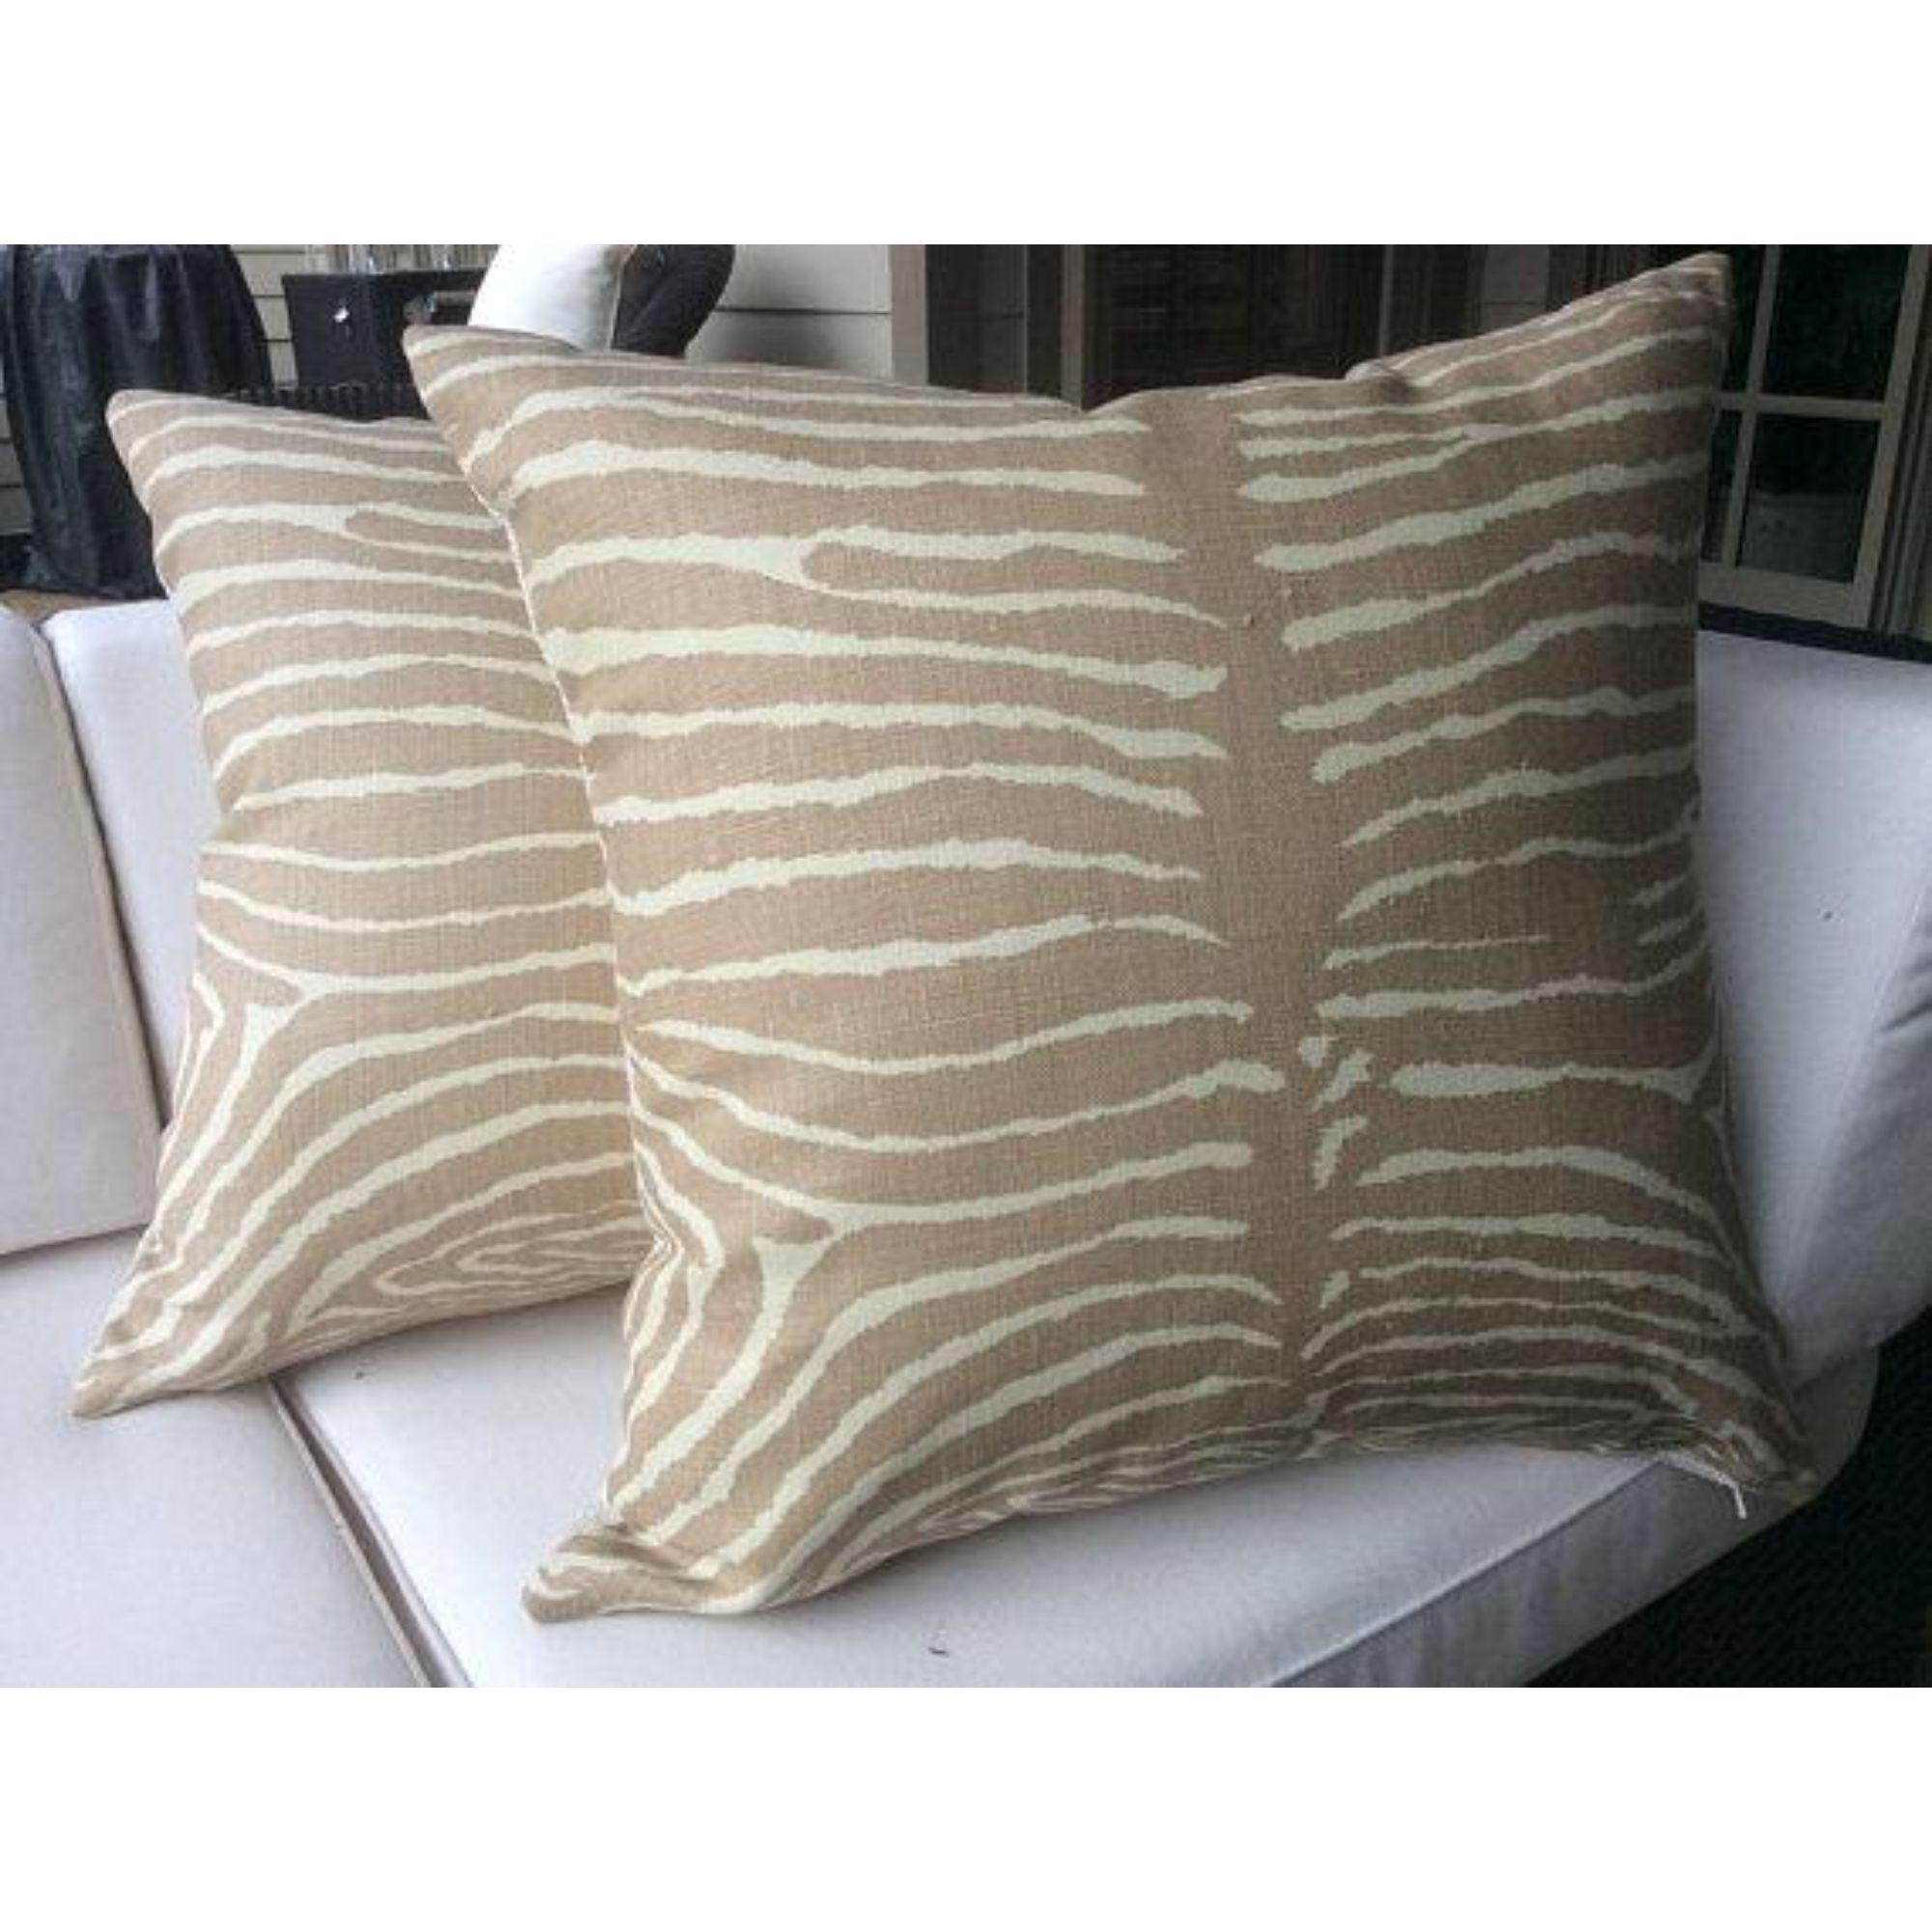 Textile Brunschwig and Fils “Pewter” Le Zebre Tan Pillows - a Pair For Sale